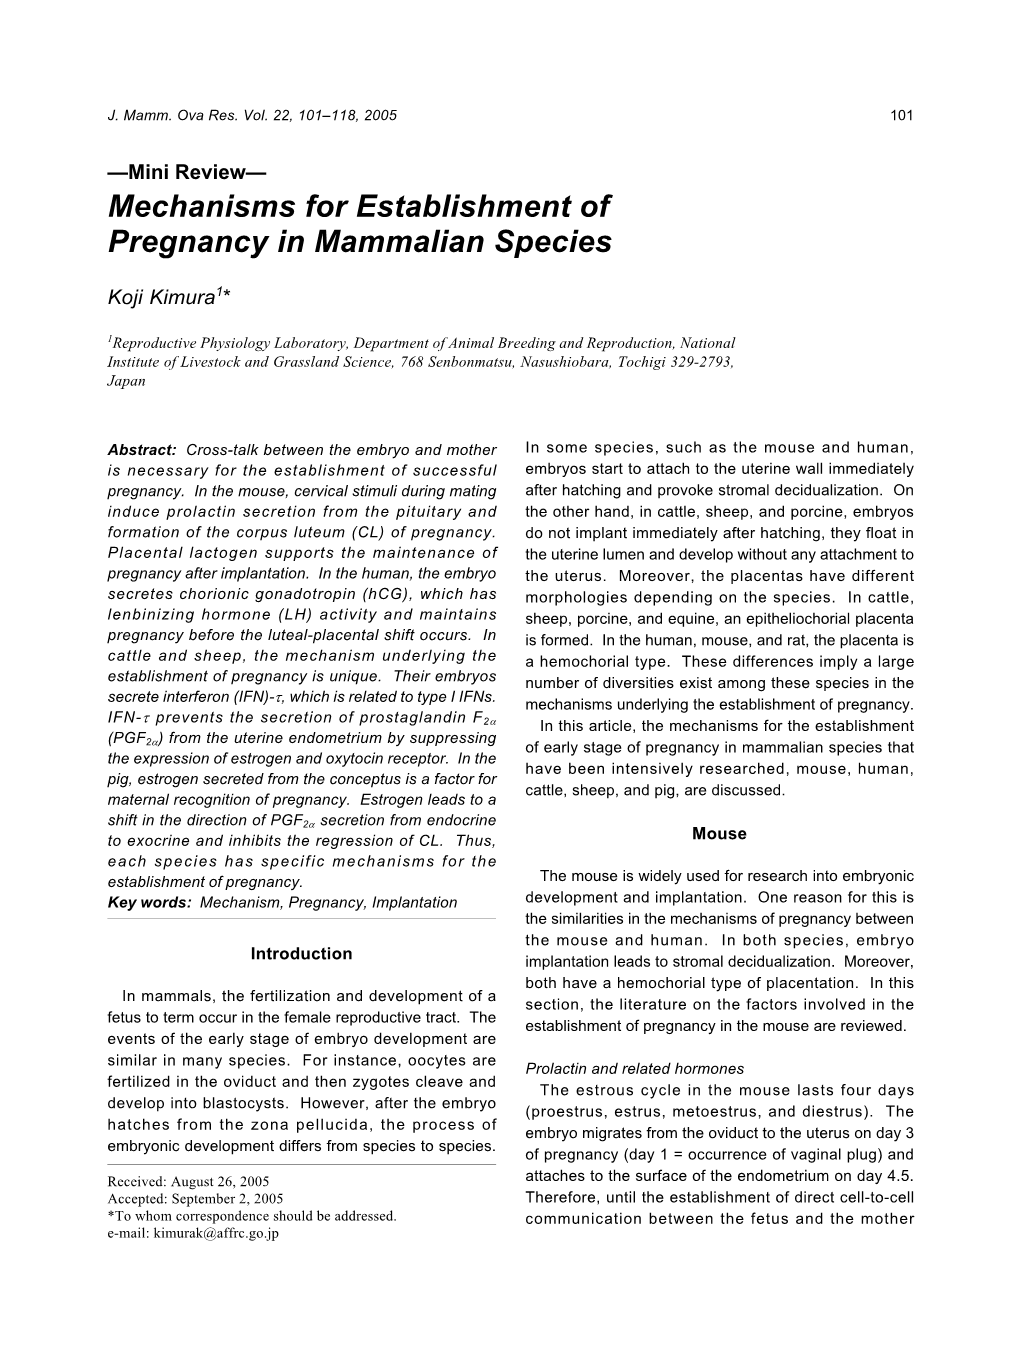 Mechanisms for Establishment of Pregnancy in Mammalian Species